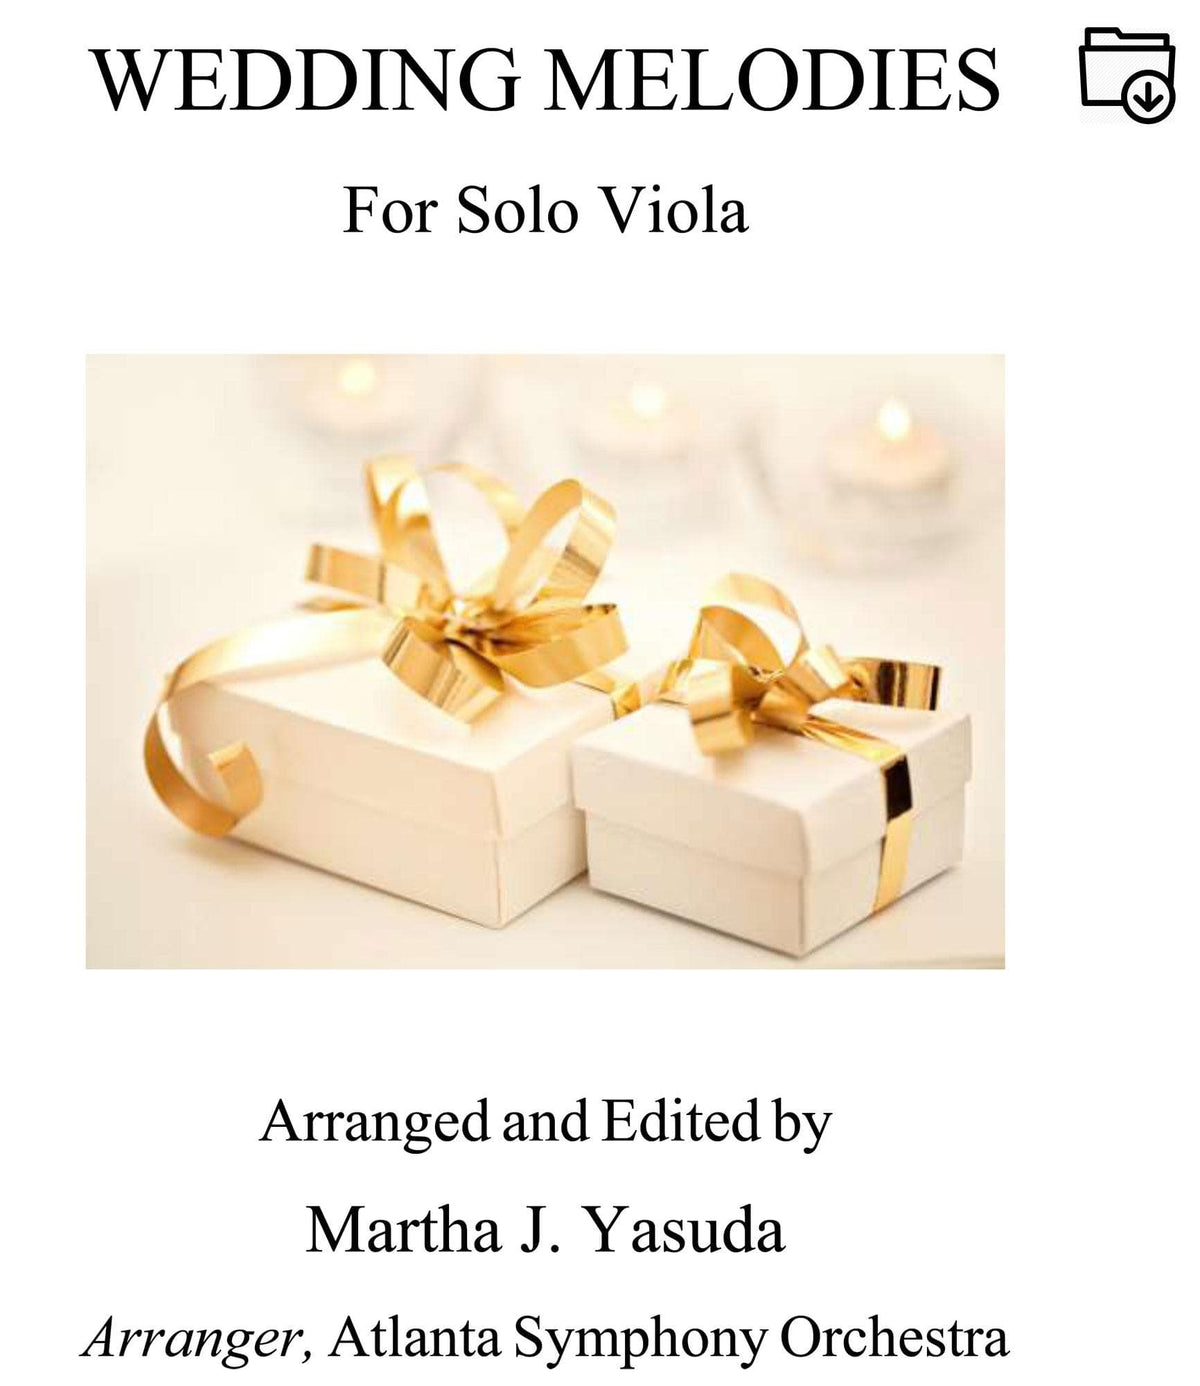 Yasuda, Martha - Wedding Melodies For Solo Viola - Digital Download